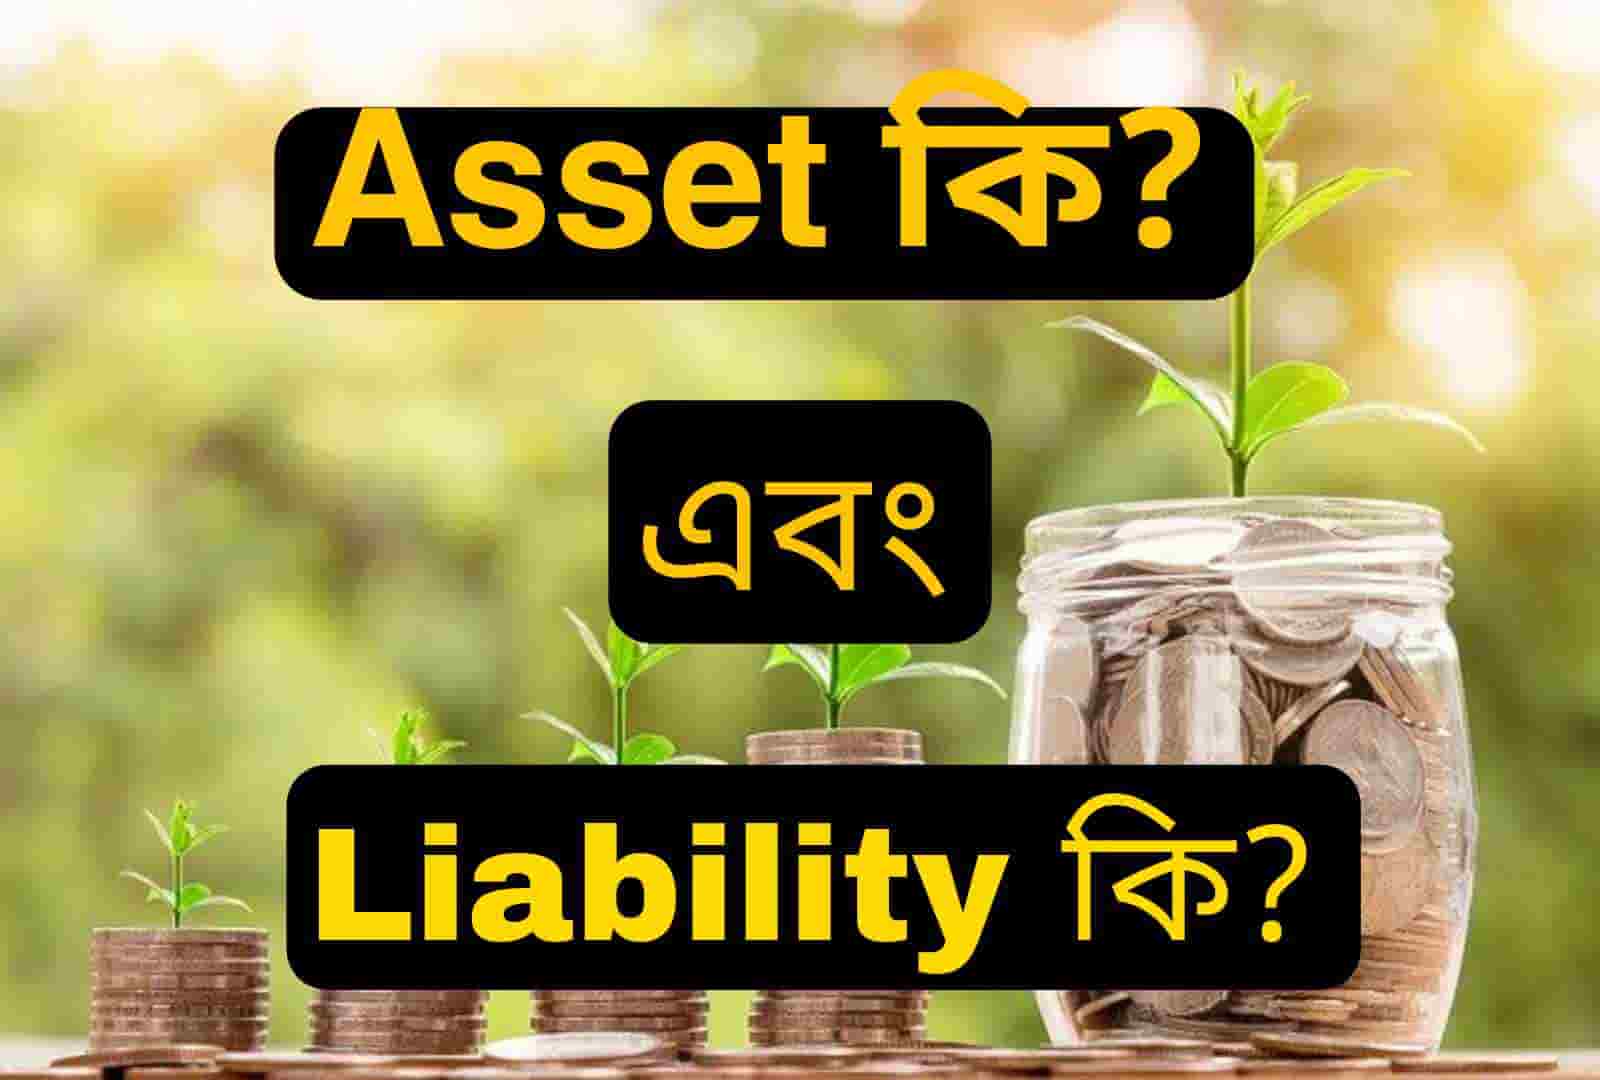 Asset কি? এবং Liability কি?